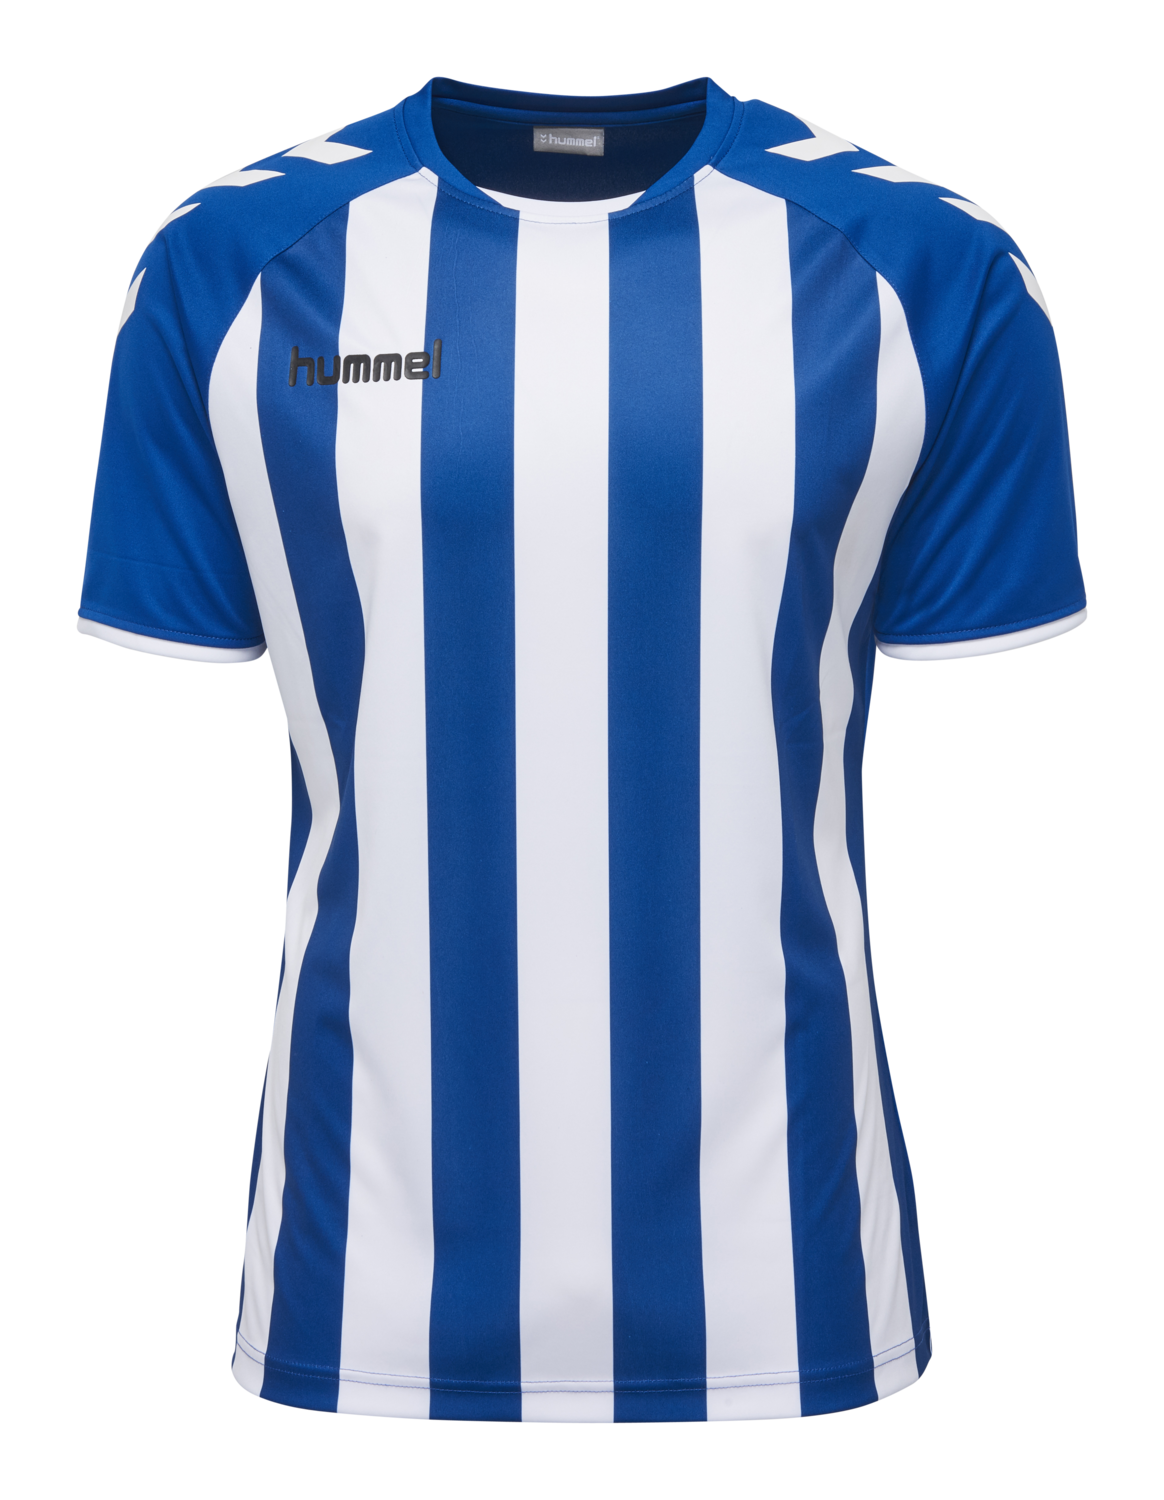 blue white striped soccer jersey